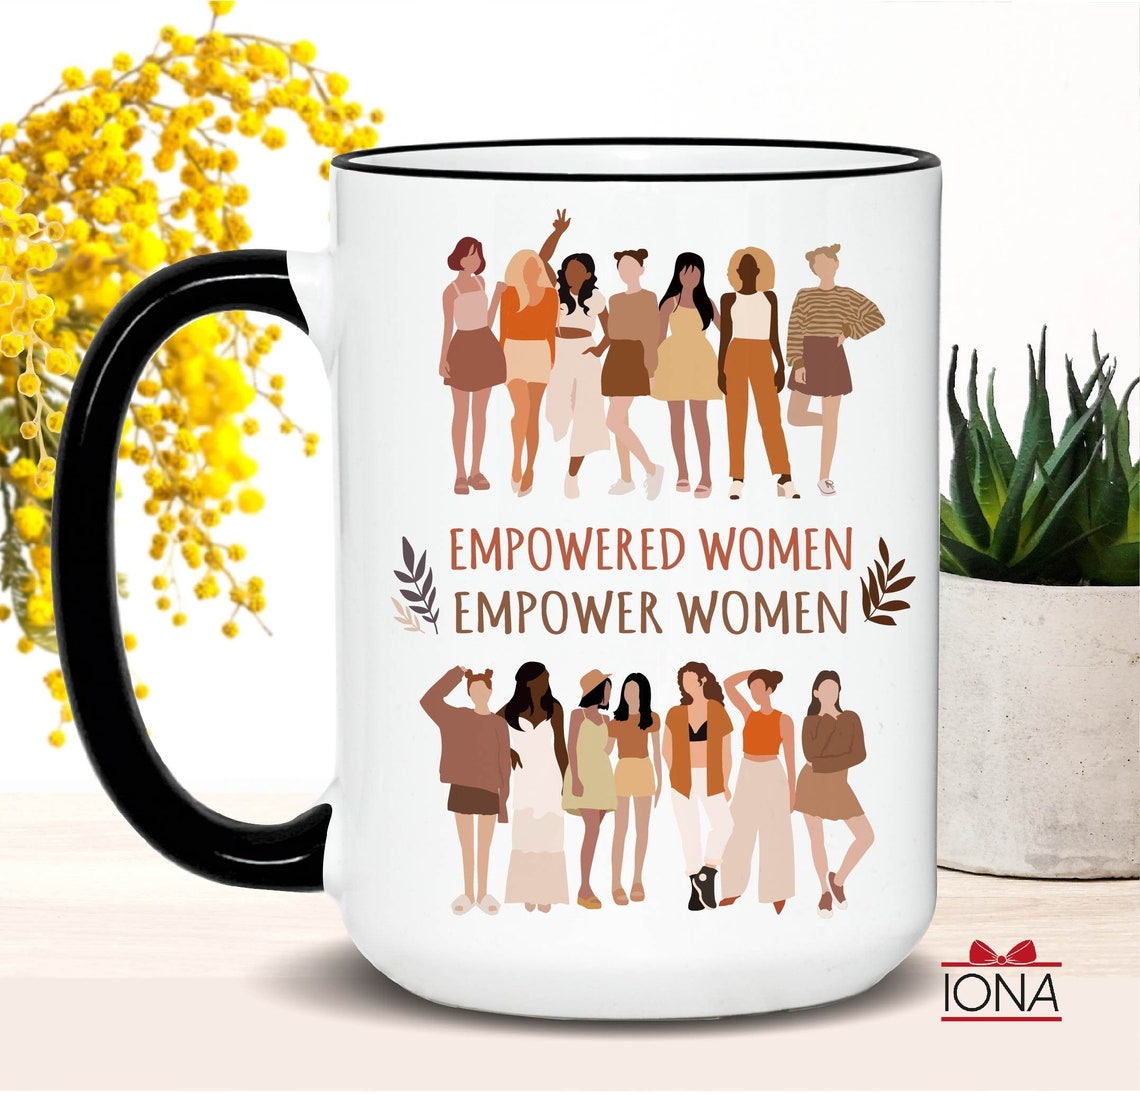 Empowered Women Empower Women Coffee Mug - Feminist gift Mugs for Women, Feminism, Motivational, Inspirational